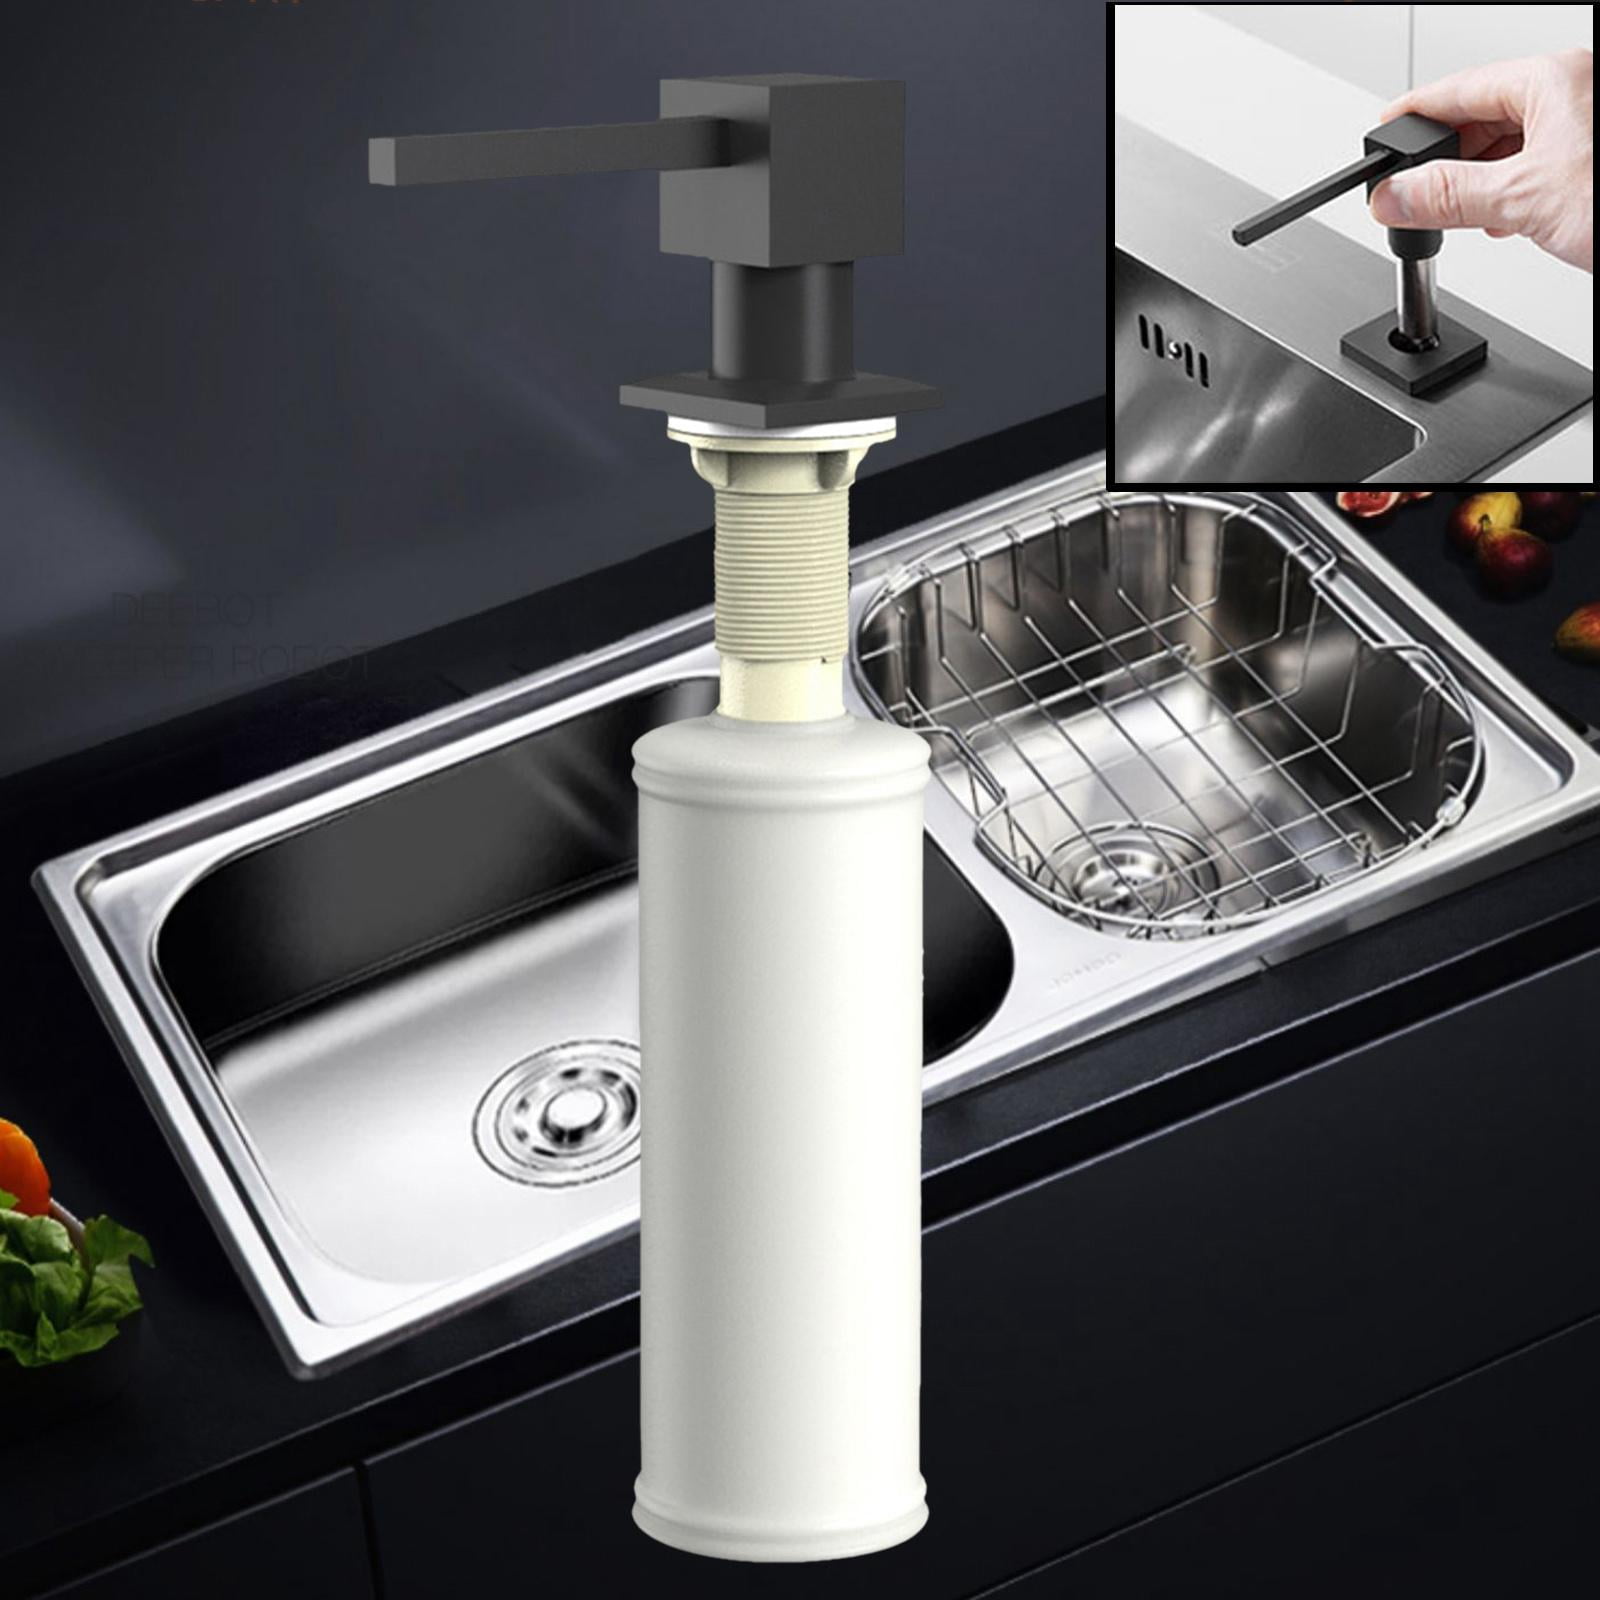 Counter Top Sink Dispenser White Soffria Dishwashing Soap Dispenser Pump Dish Soap Dispense for Kitchen Durable Instant Refill 